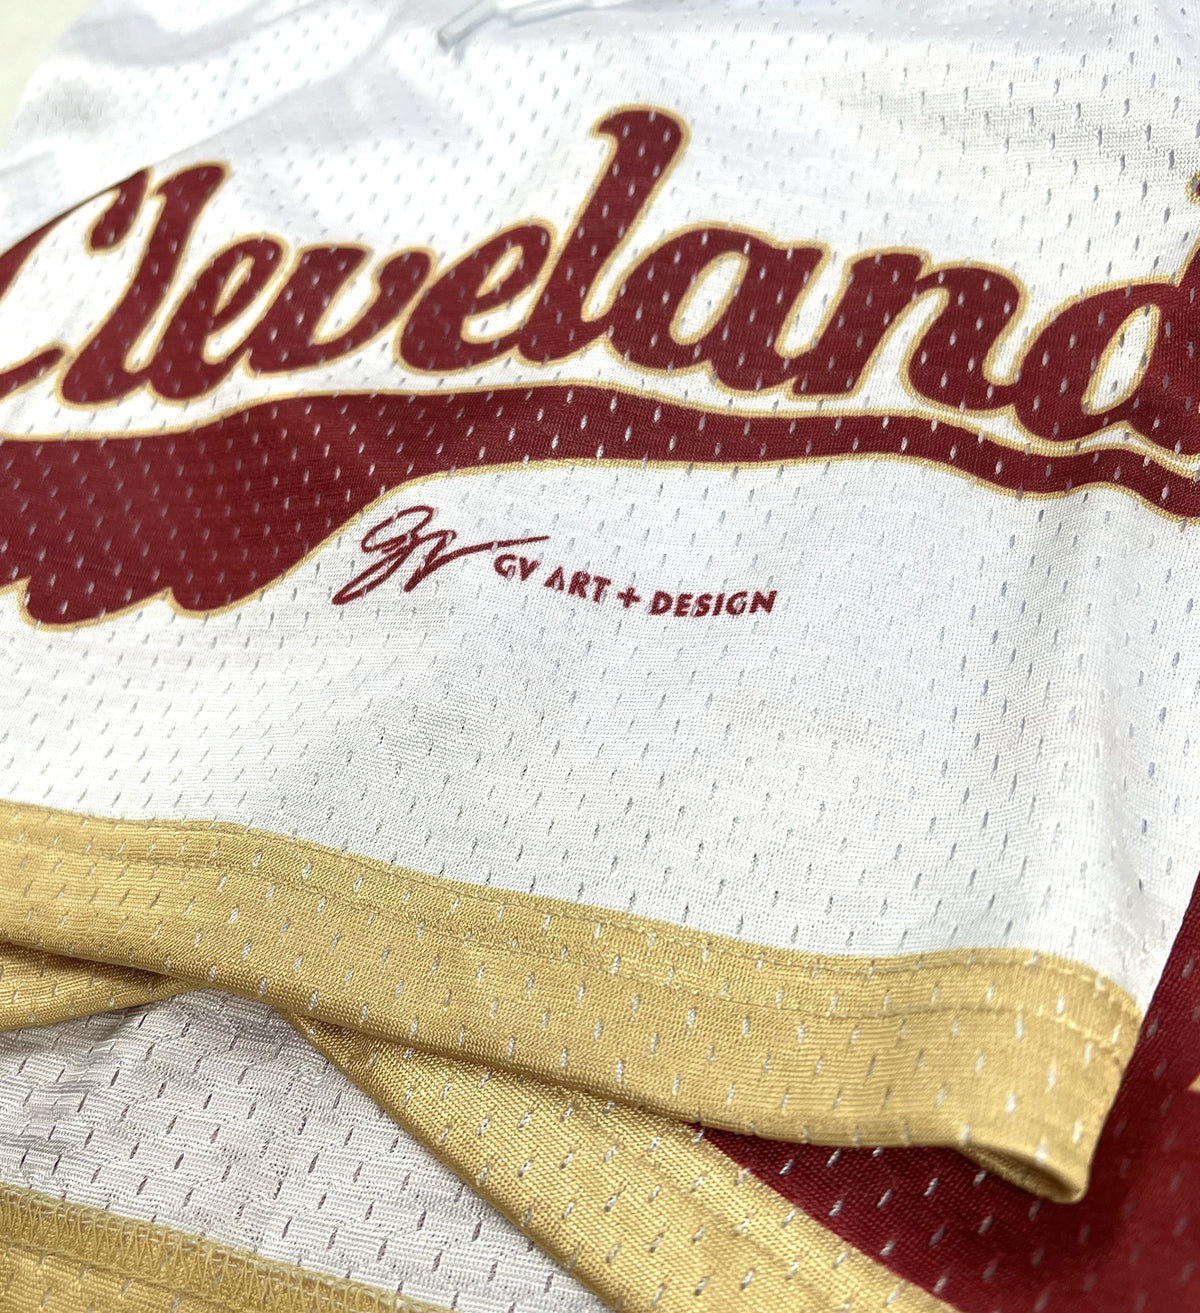 Limited Edition White Cleveland Basketball Shorts